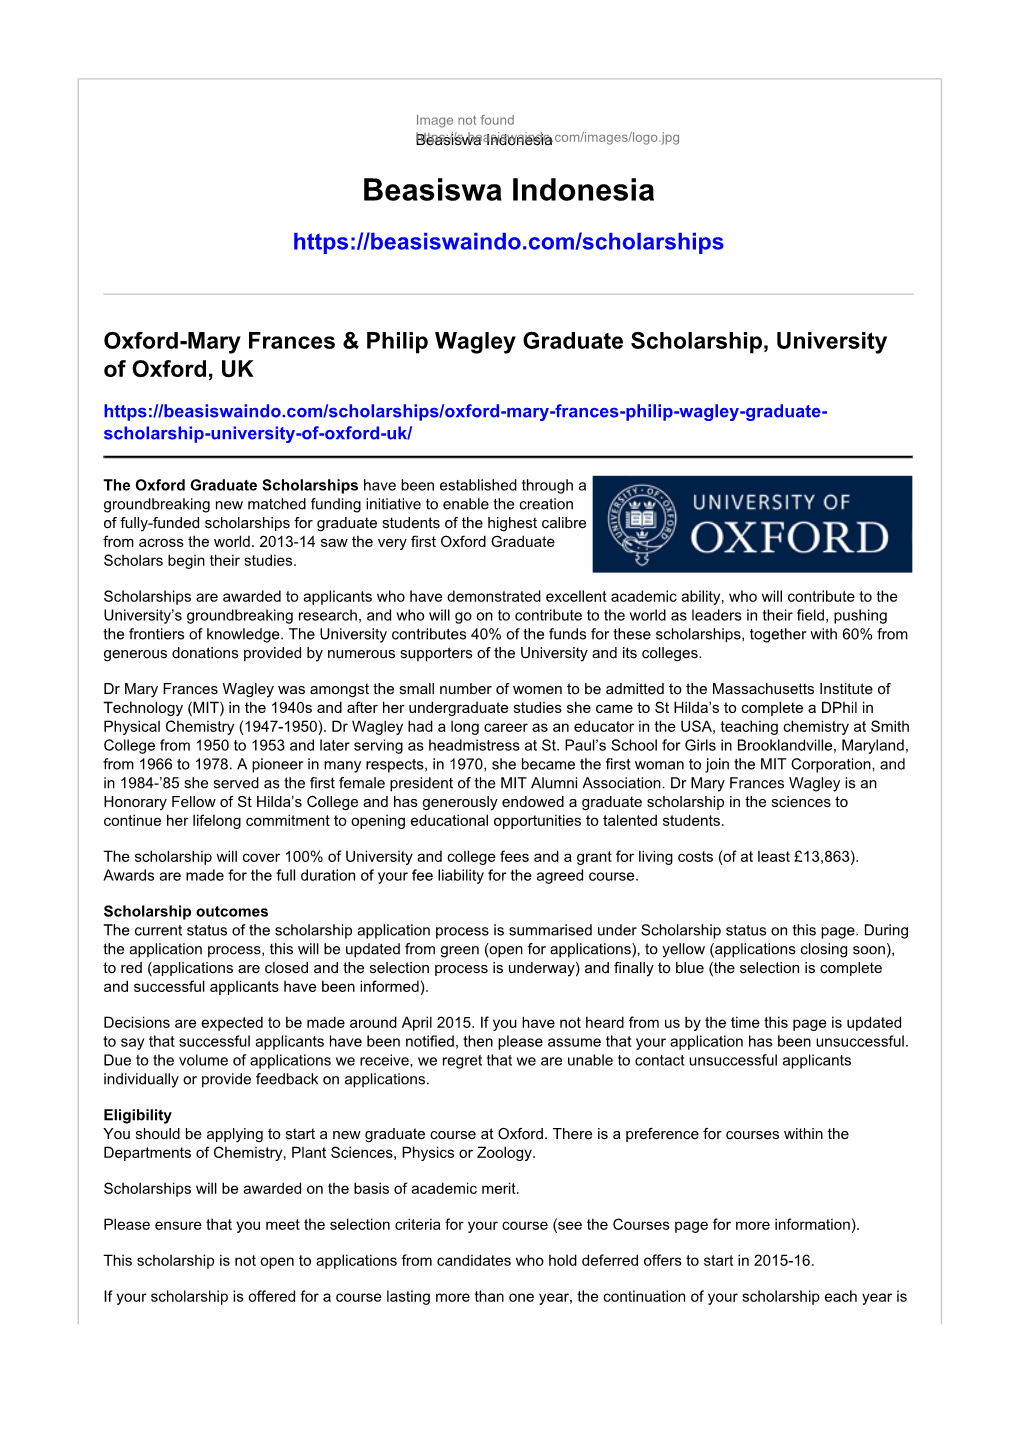 Oxford-Mary Frances & Philip Wagley Graduate Scholarship, University of Oxford, UK